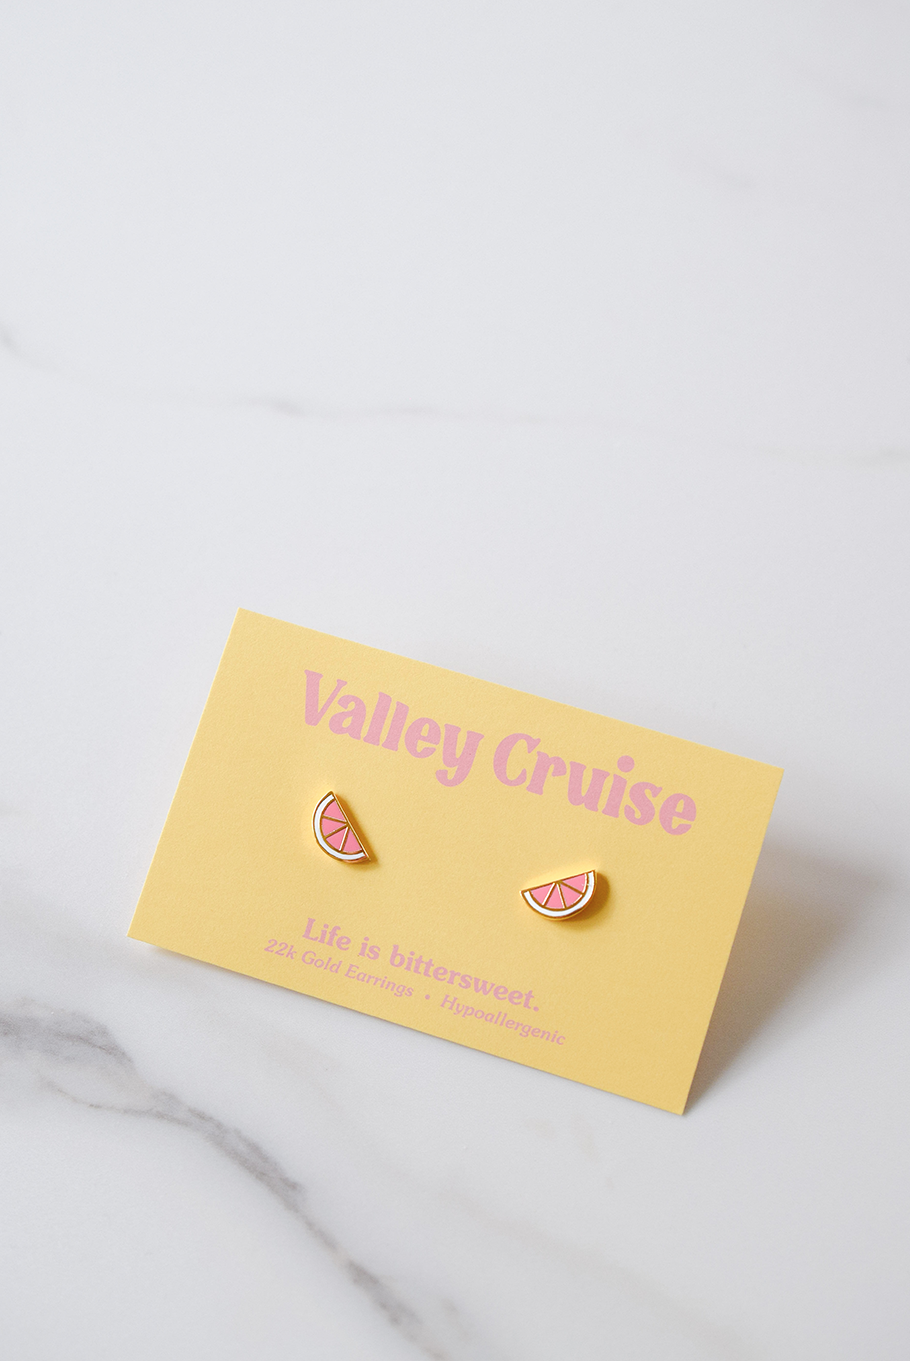 Grapefruit Earrings – Valley Cruise Press